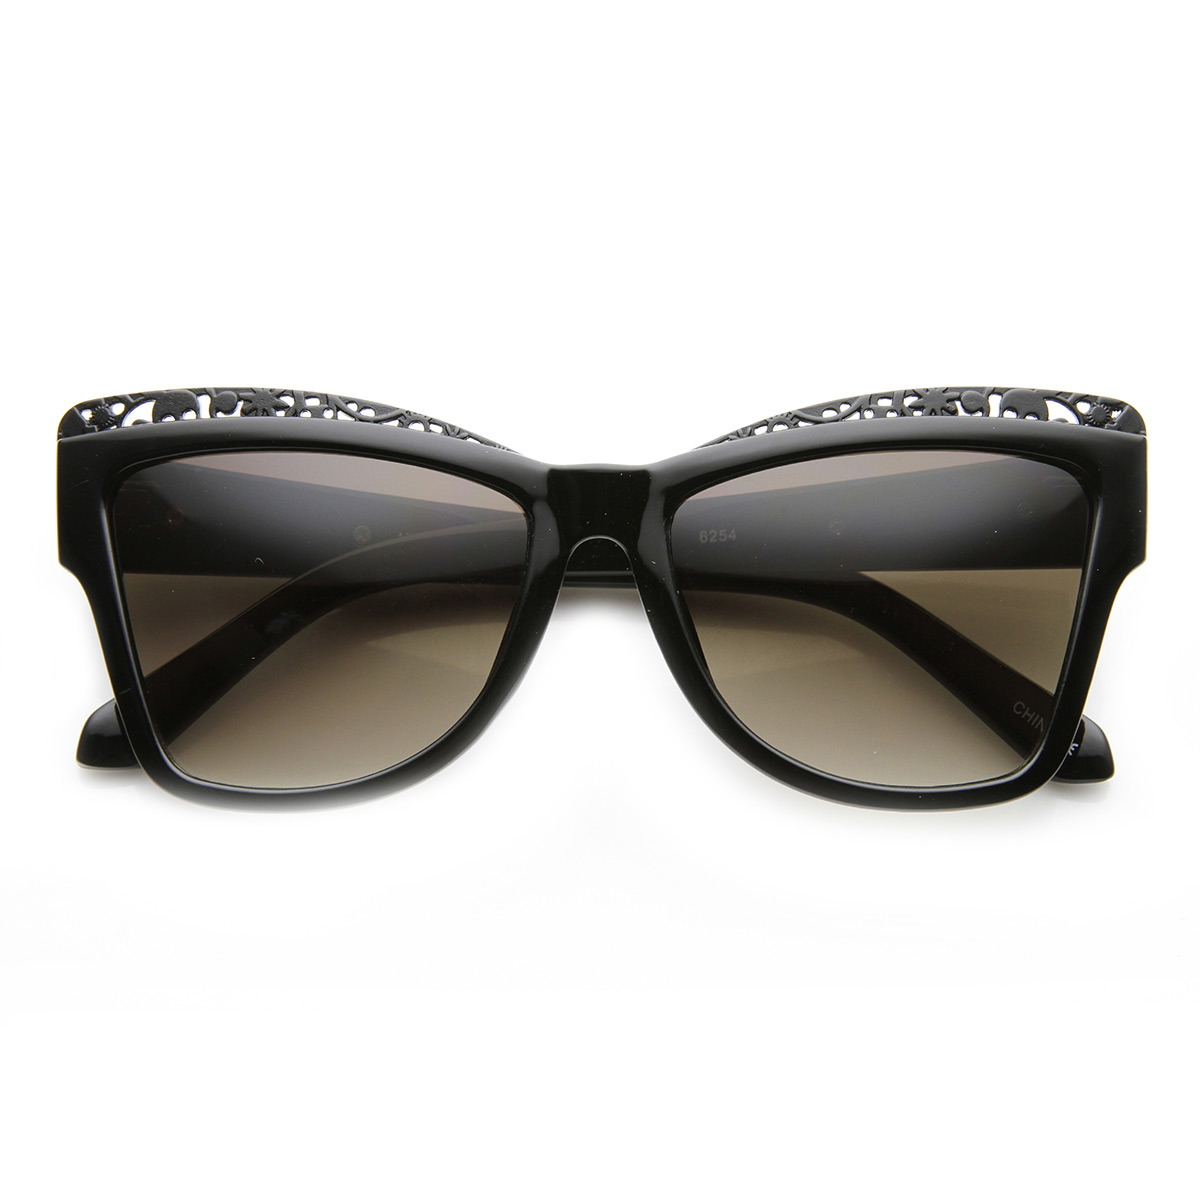 High Fashion Chic Metal Cut-Out Artwork Women's Cat Eye Sunglasses 9603 - Black-Black Lavender